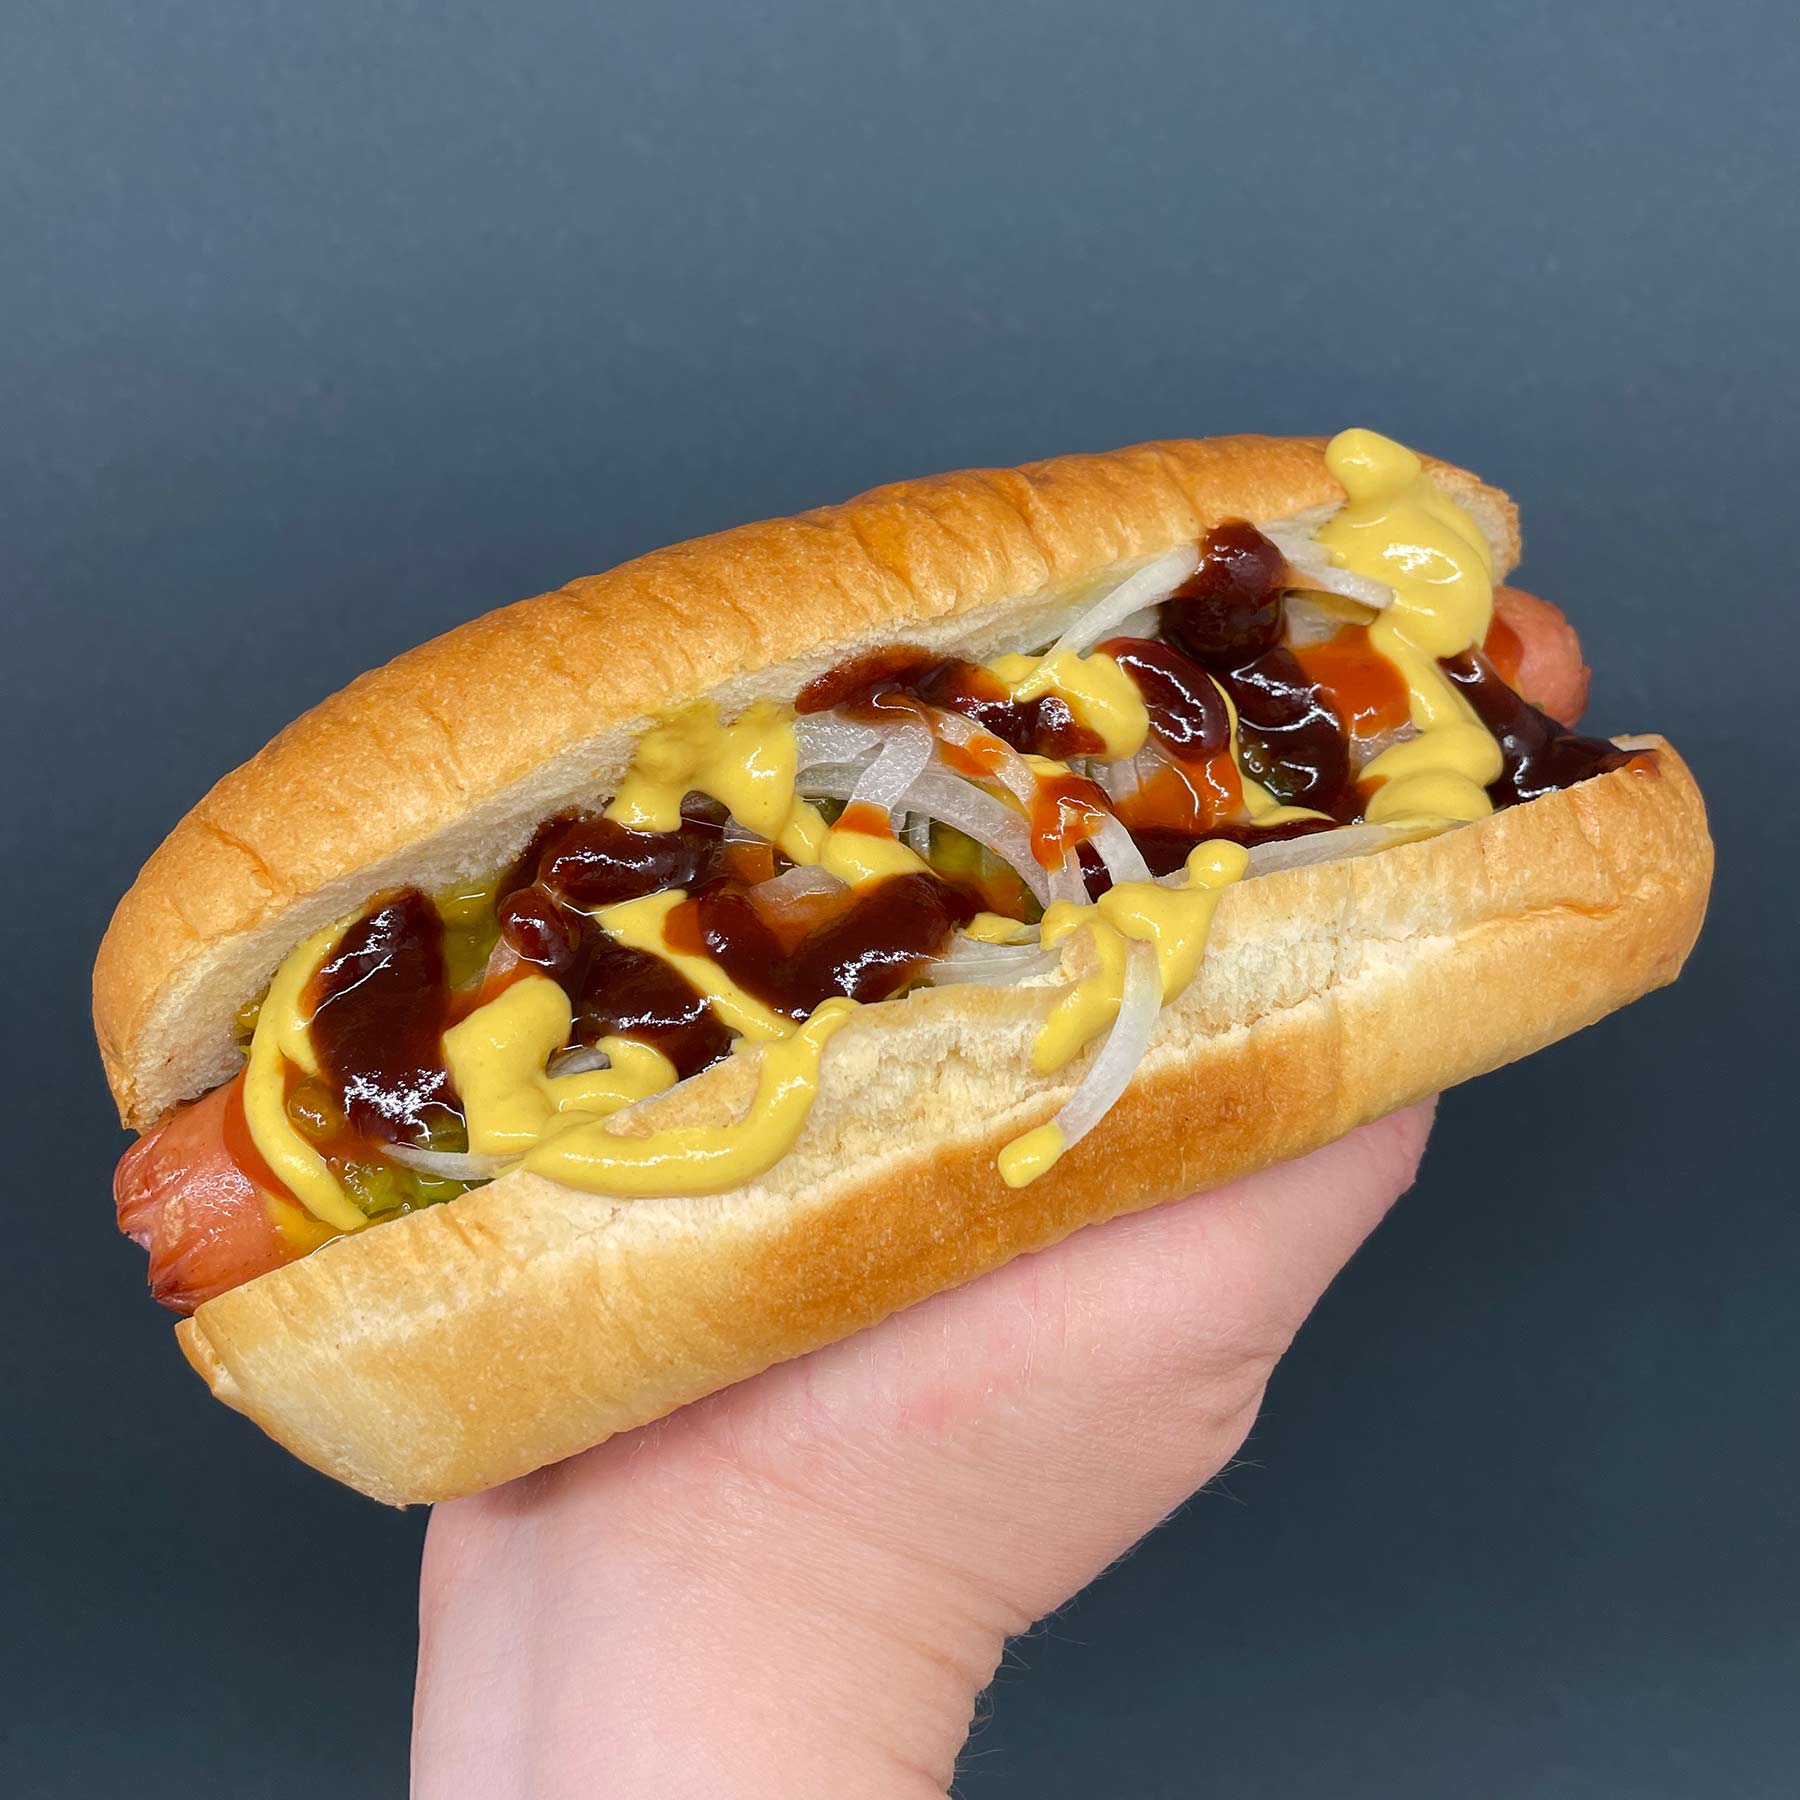 Hot Dog Potato Rolls • 60gr